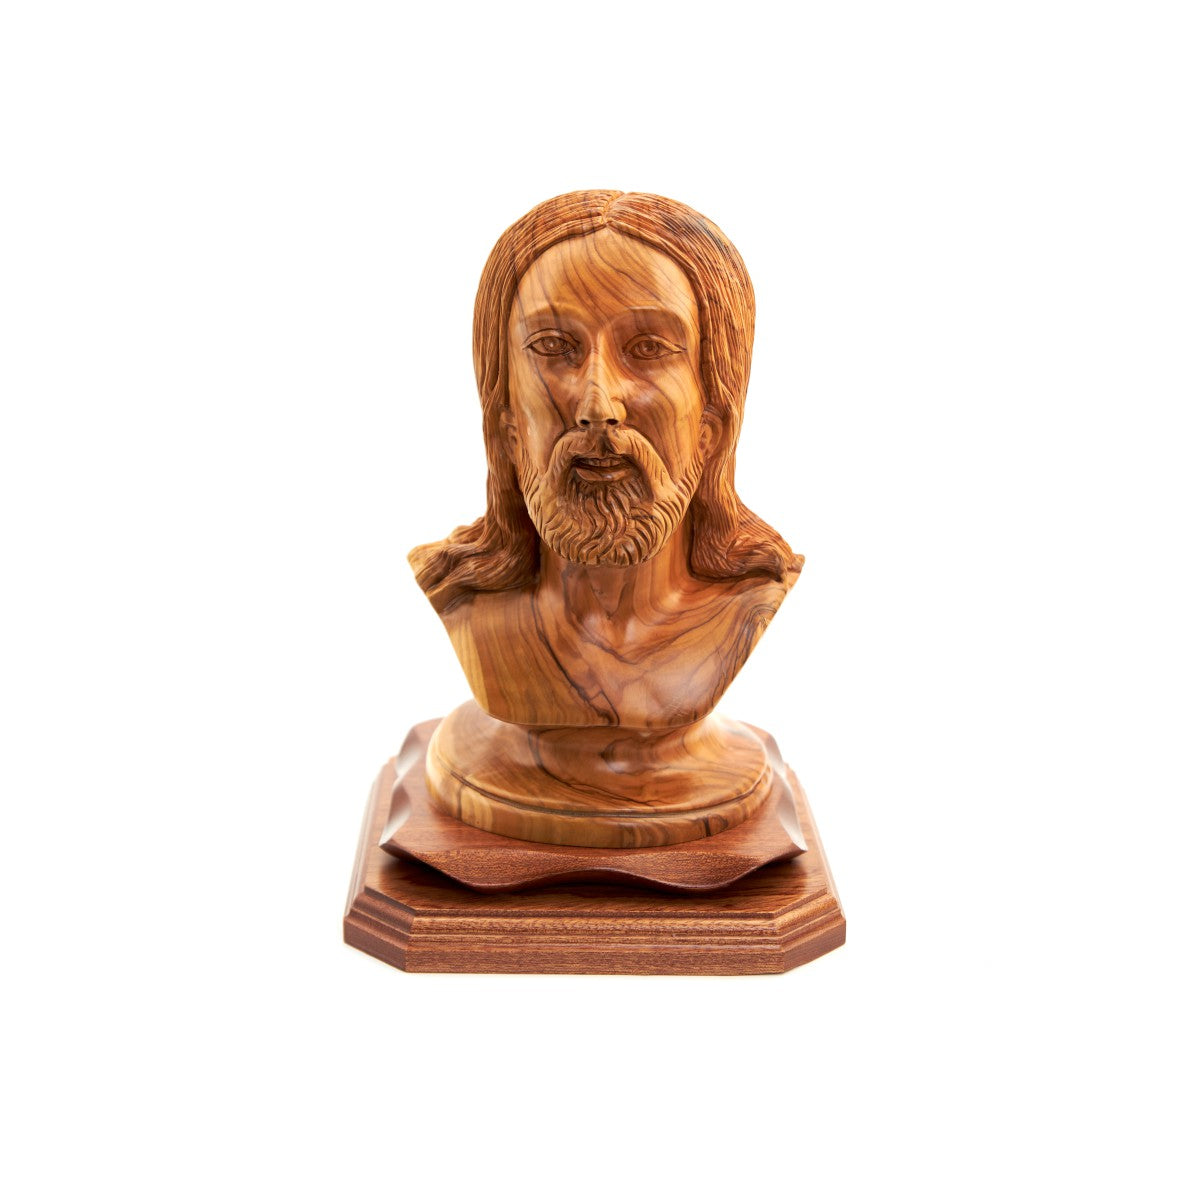 Bust of Jesus Christ, Wooden Sculpture 10.6"